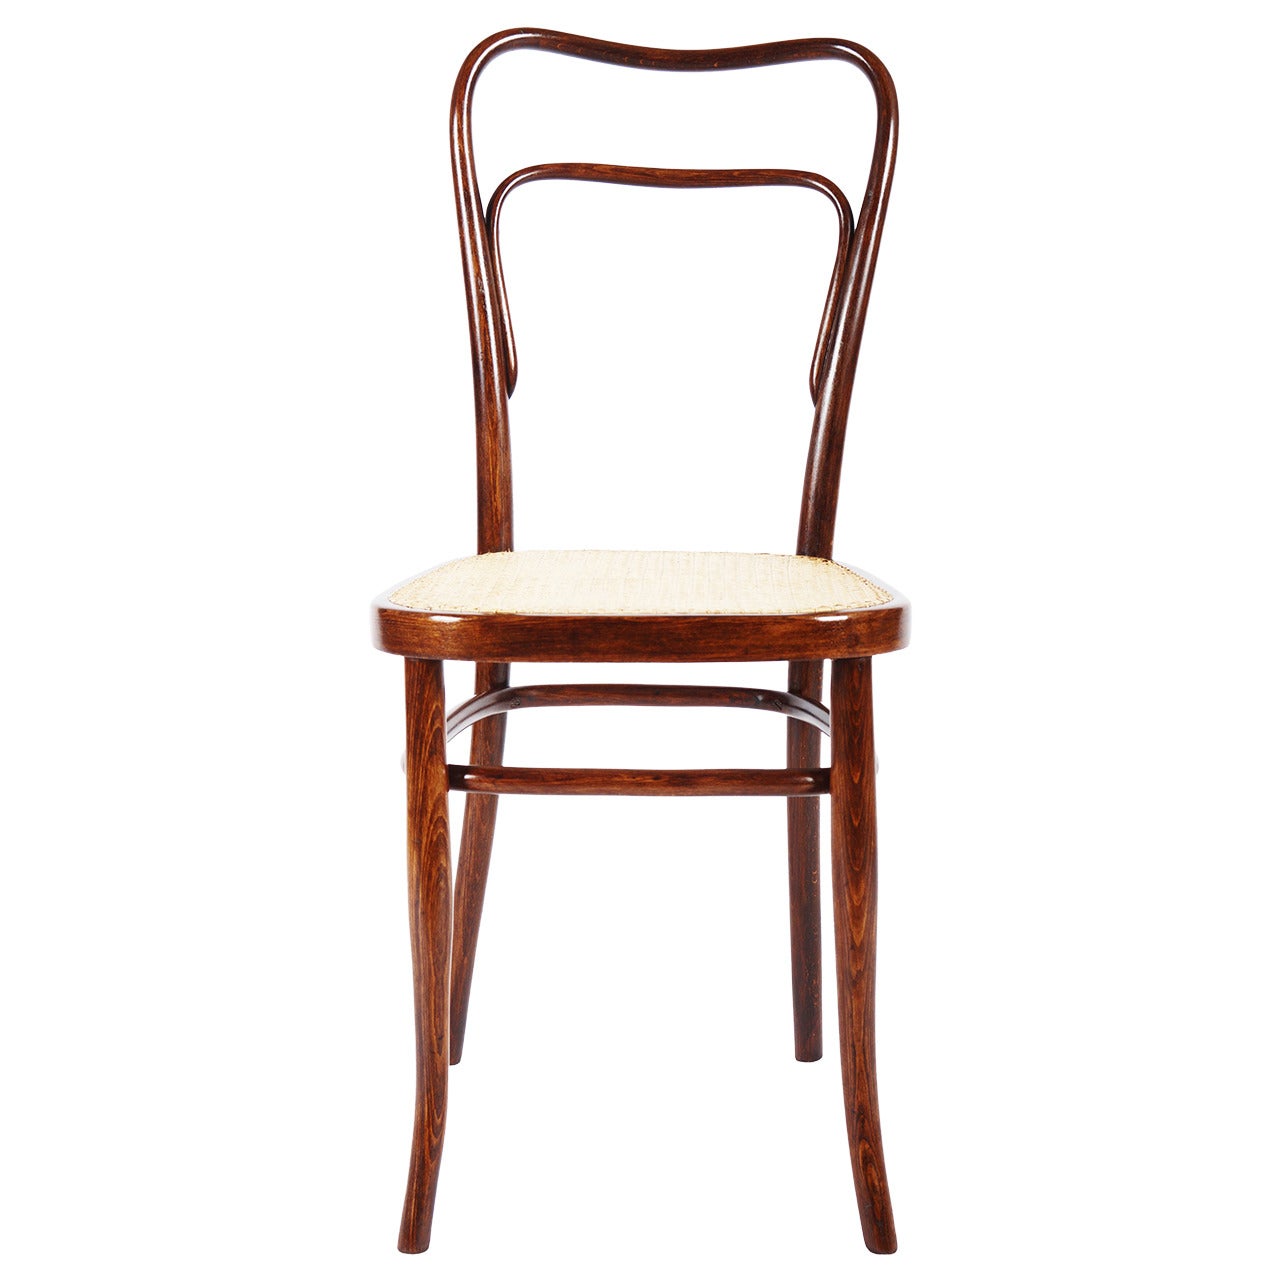 Kohn Bent Wood Chair Attributed to Adolf Loos